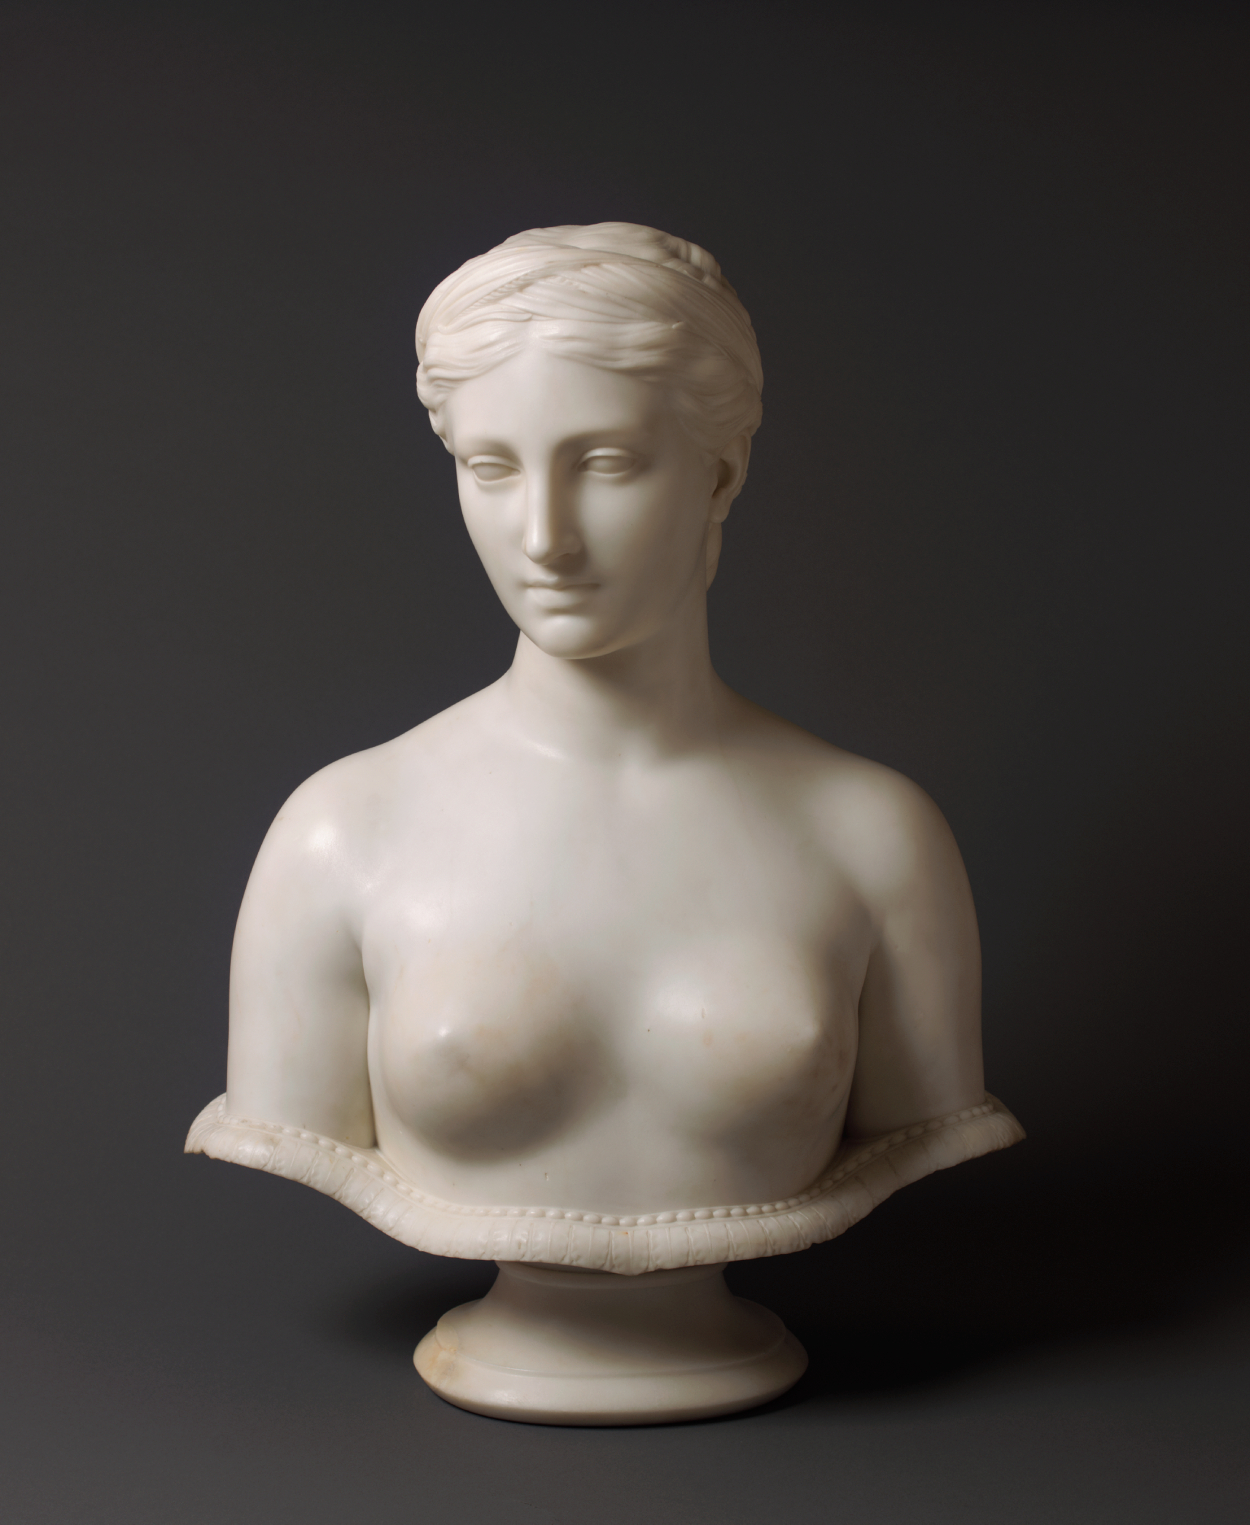 Proserpina by Hiram Powers - 1860 körül - 64,77 x 50,8 x 30,48 cm 